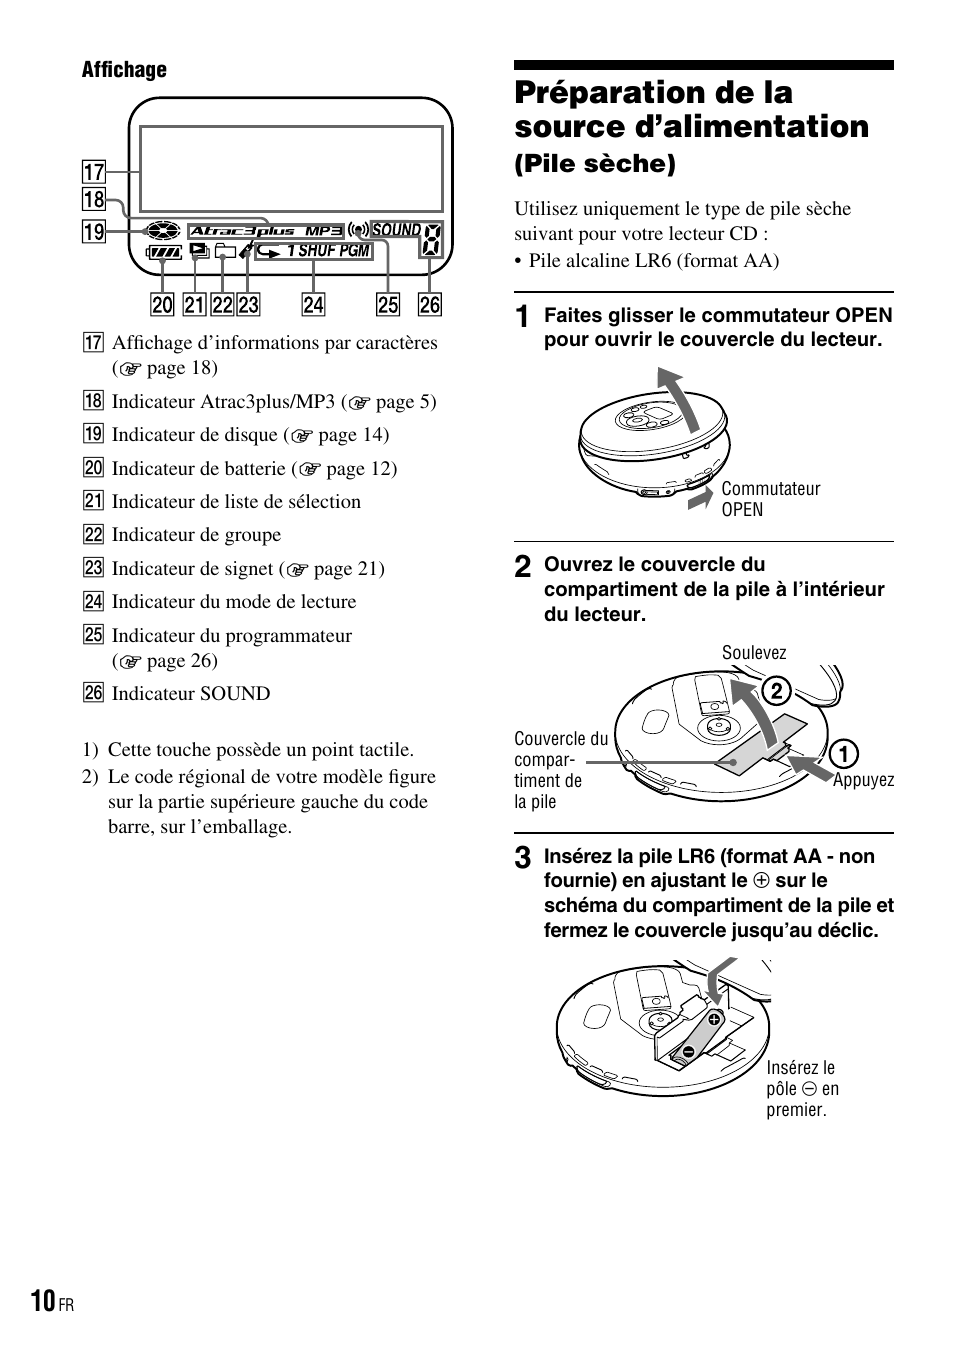 Préparation de la source, D’alimentation (pile sèche), Préparation de la source d’alimentation | Pile sèche) | Sony ATRAC CD WALKMAN NE320 Manual del usuario | Página 42 / 99